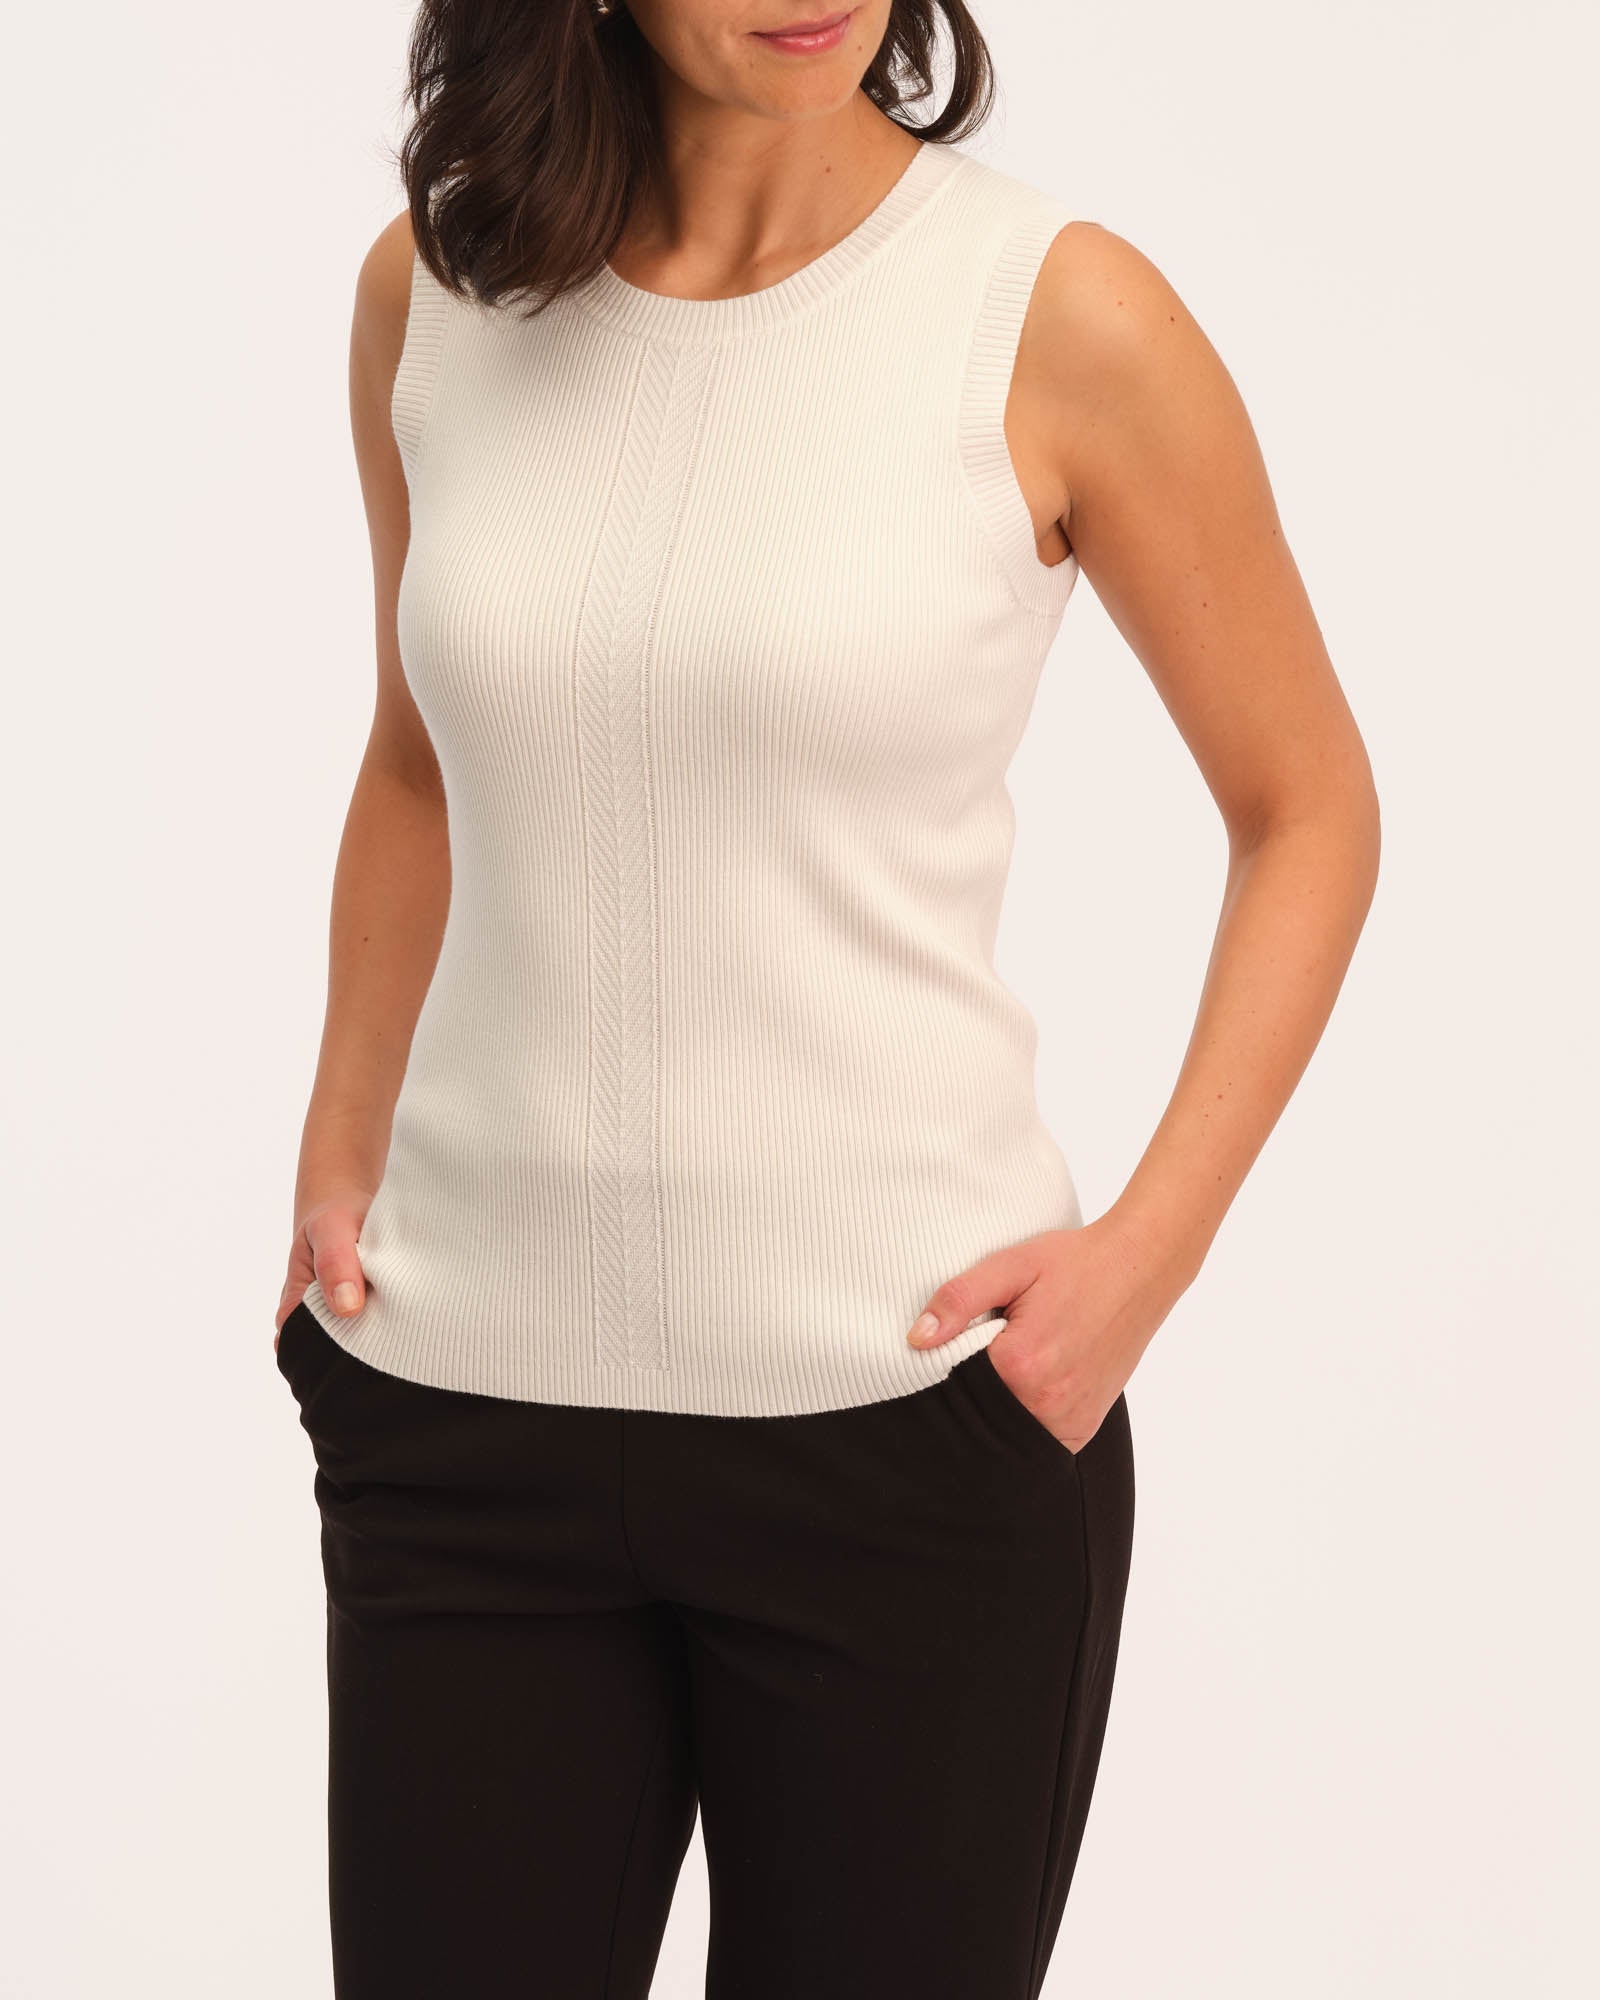 Elie Elie Tahari Women's Sleeveless Chevron Stitch Sweater Tank | JANE + MERCER